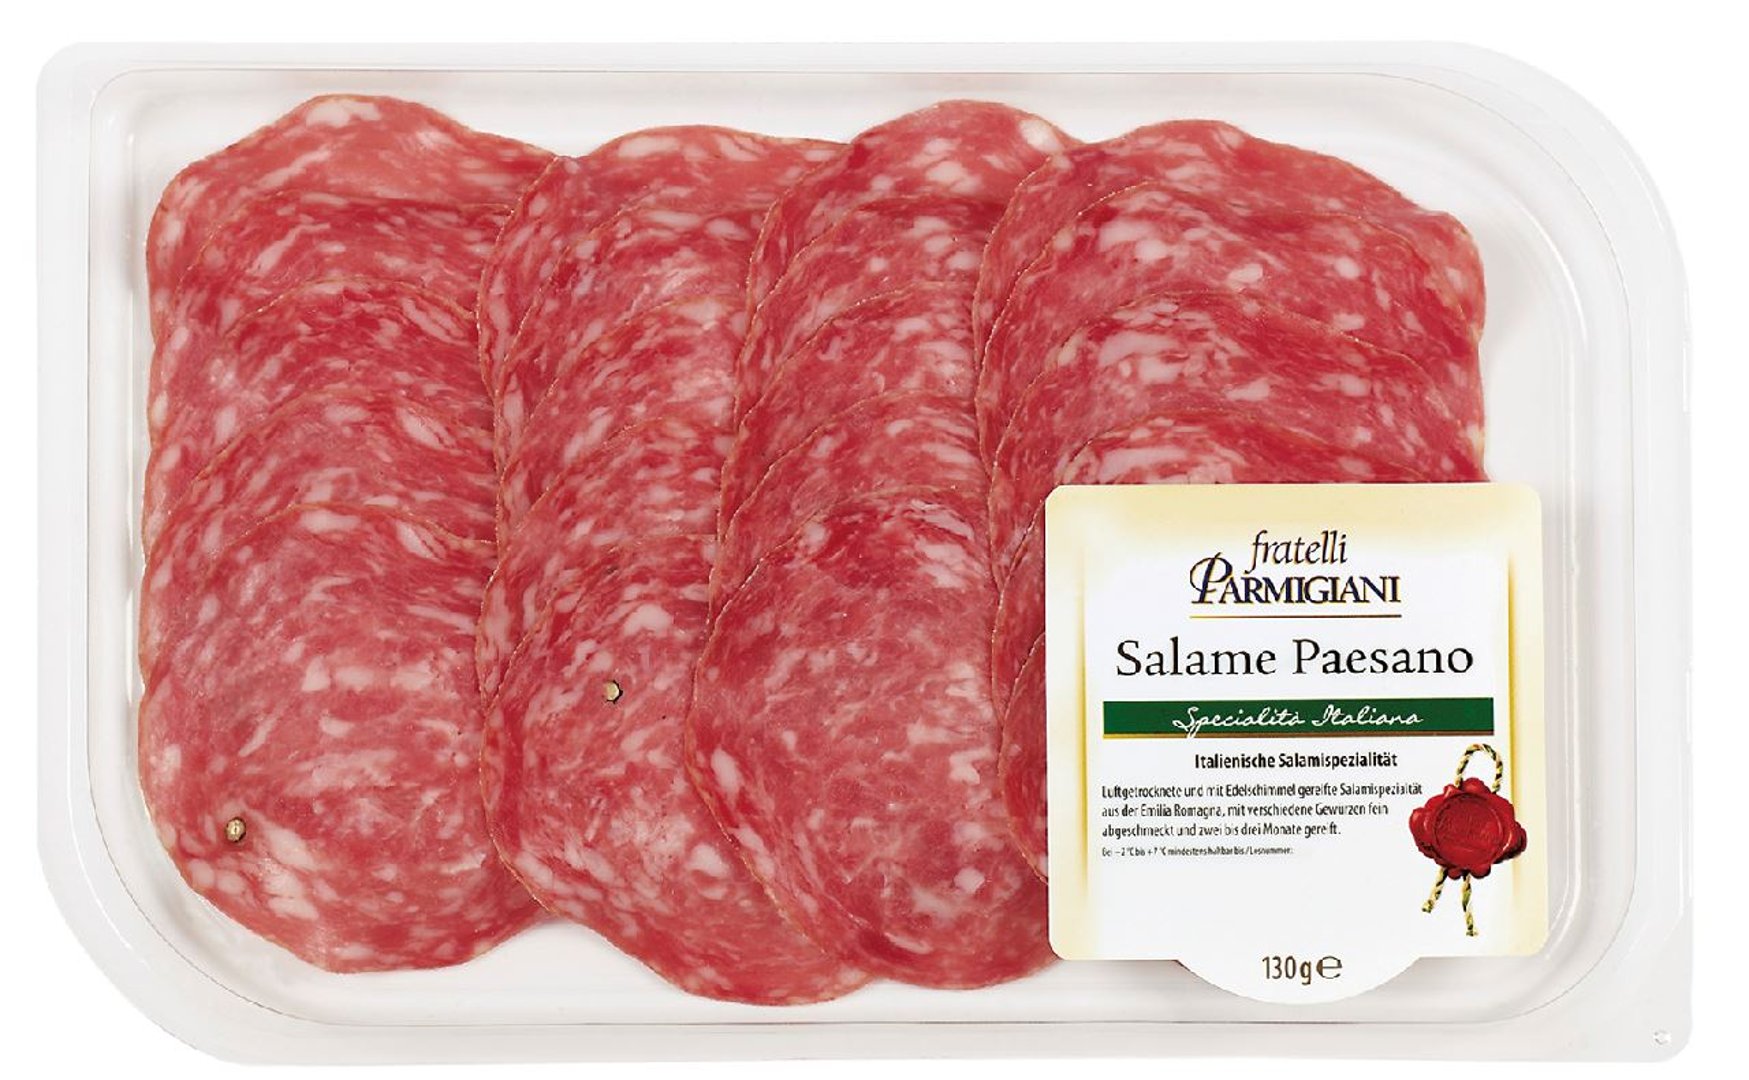 Fratelli Parmigiani - Salame Paesano - 130 g Packung